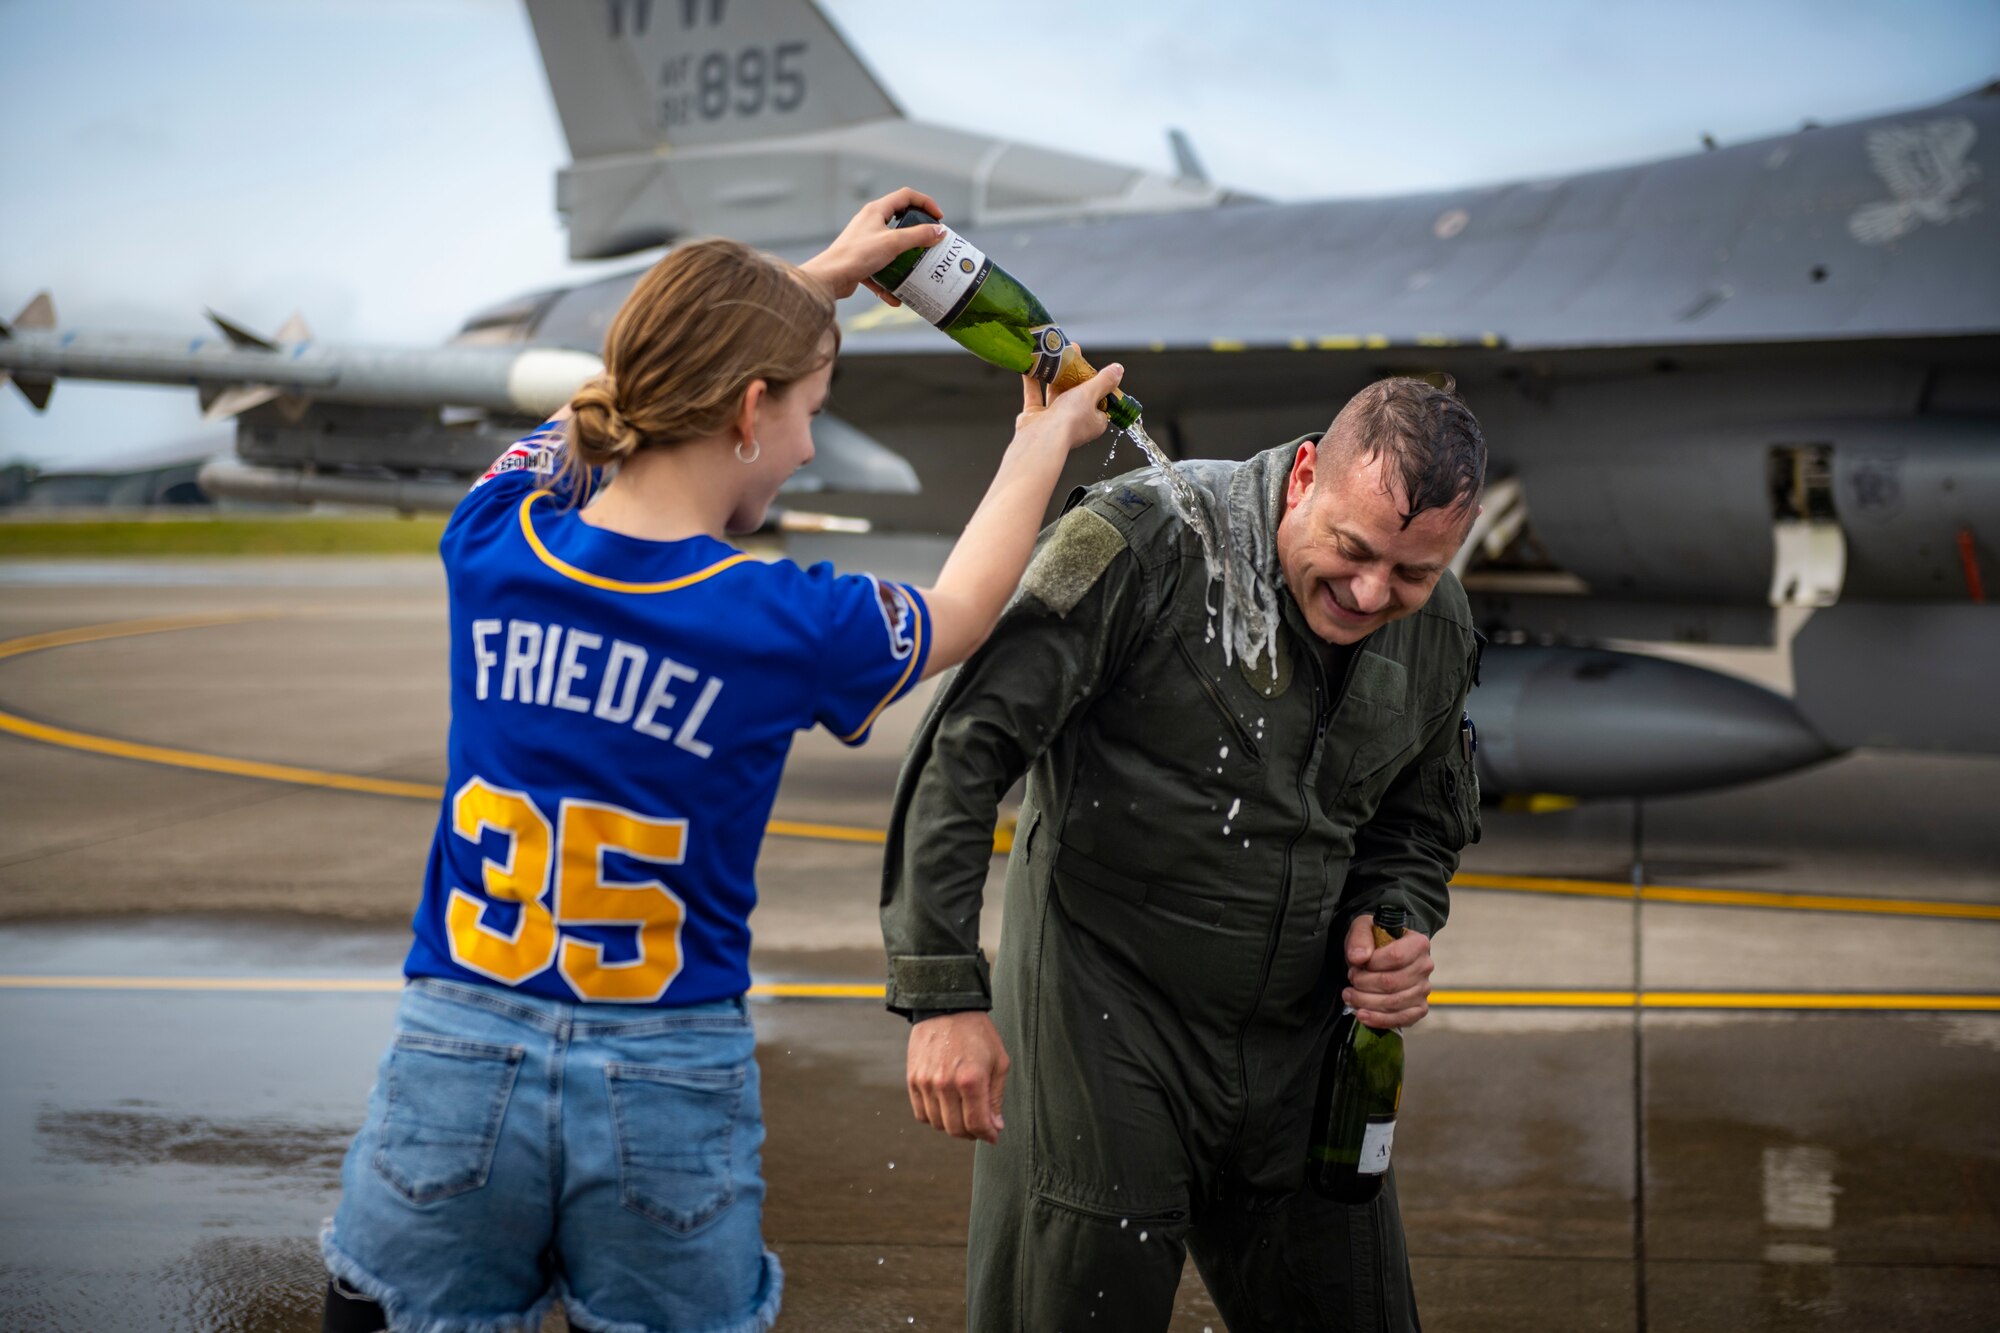 U.S. civilian dumps a bottle of champagne onto a U.S. military member in uniform.